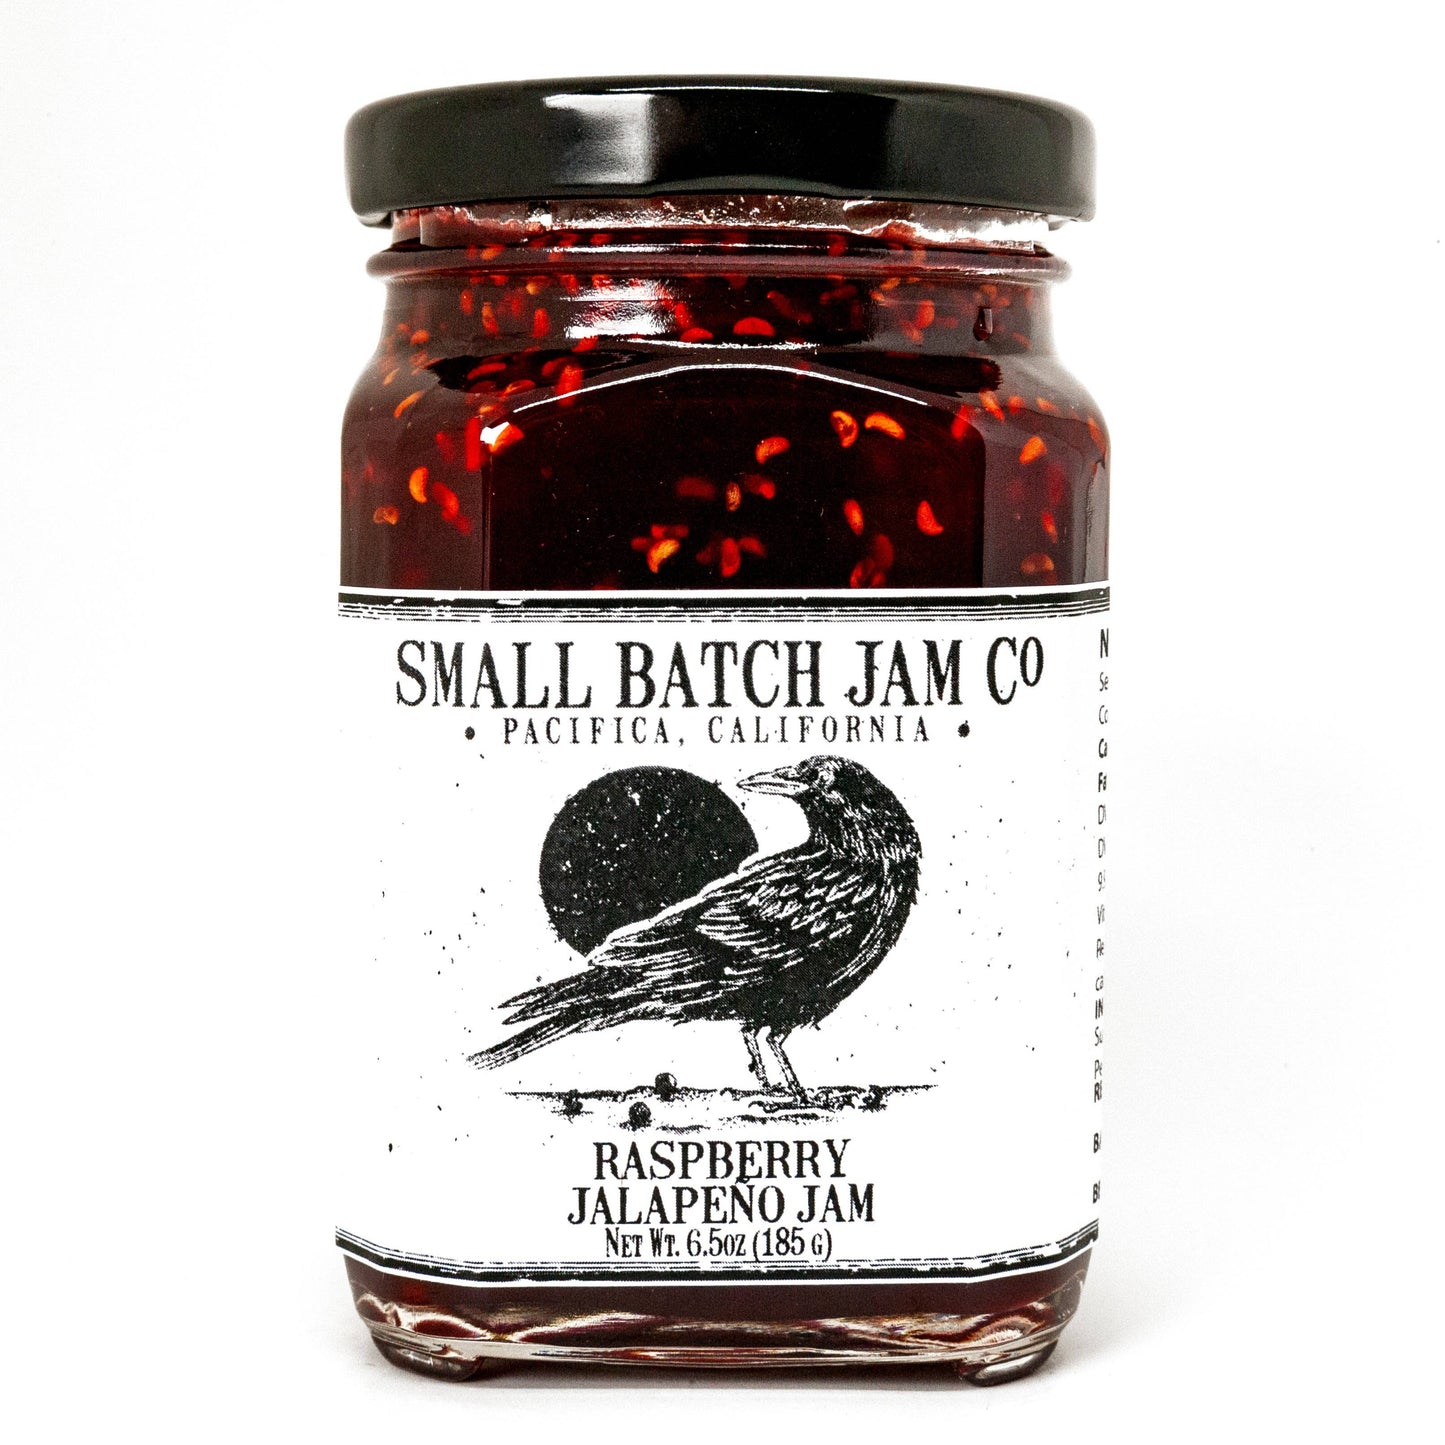 Small Batch Jam Co. Raspberry Jalapeno Jam